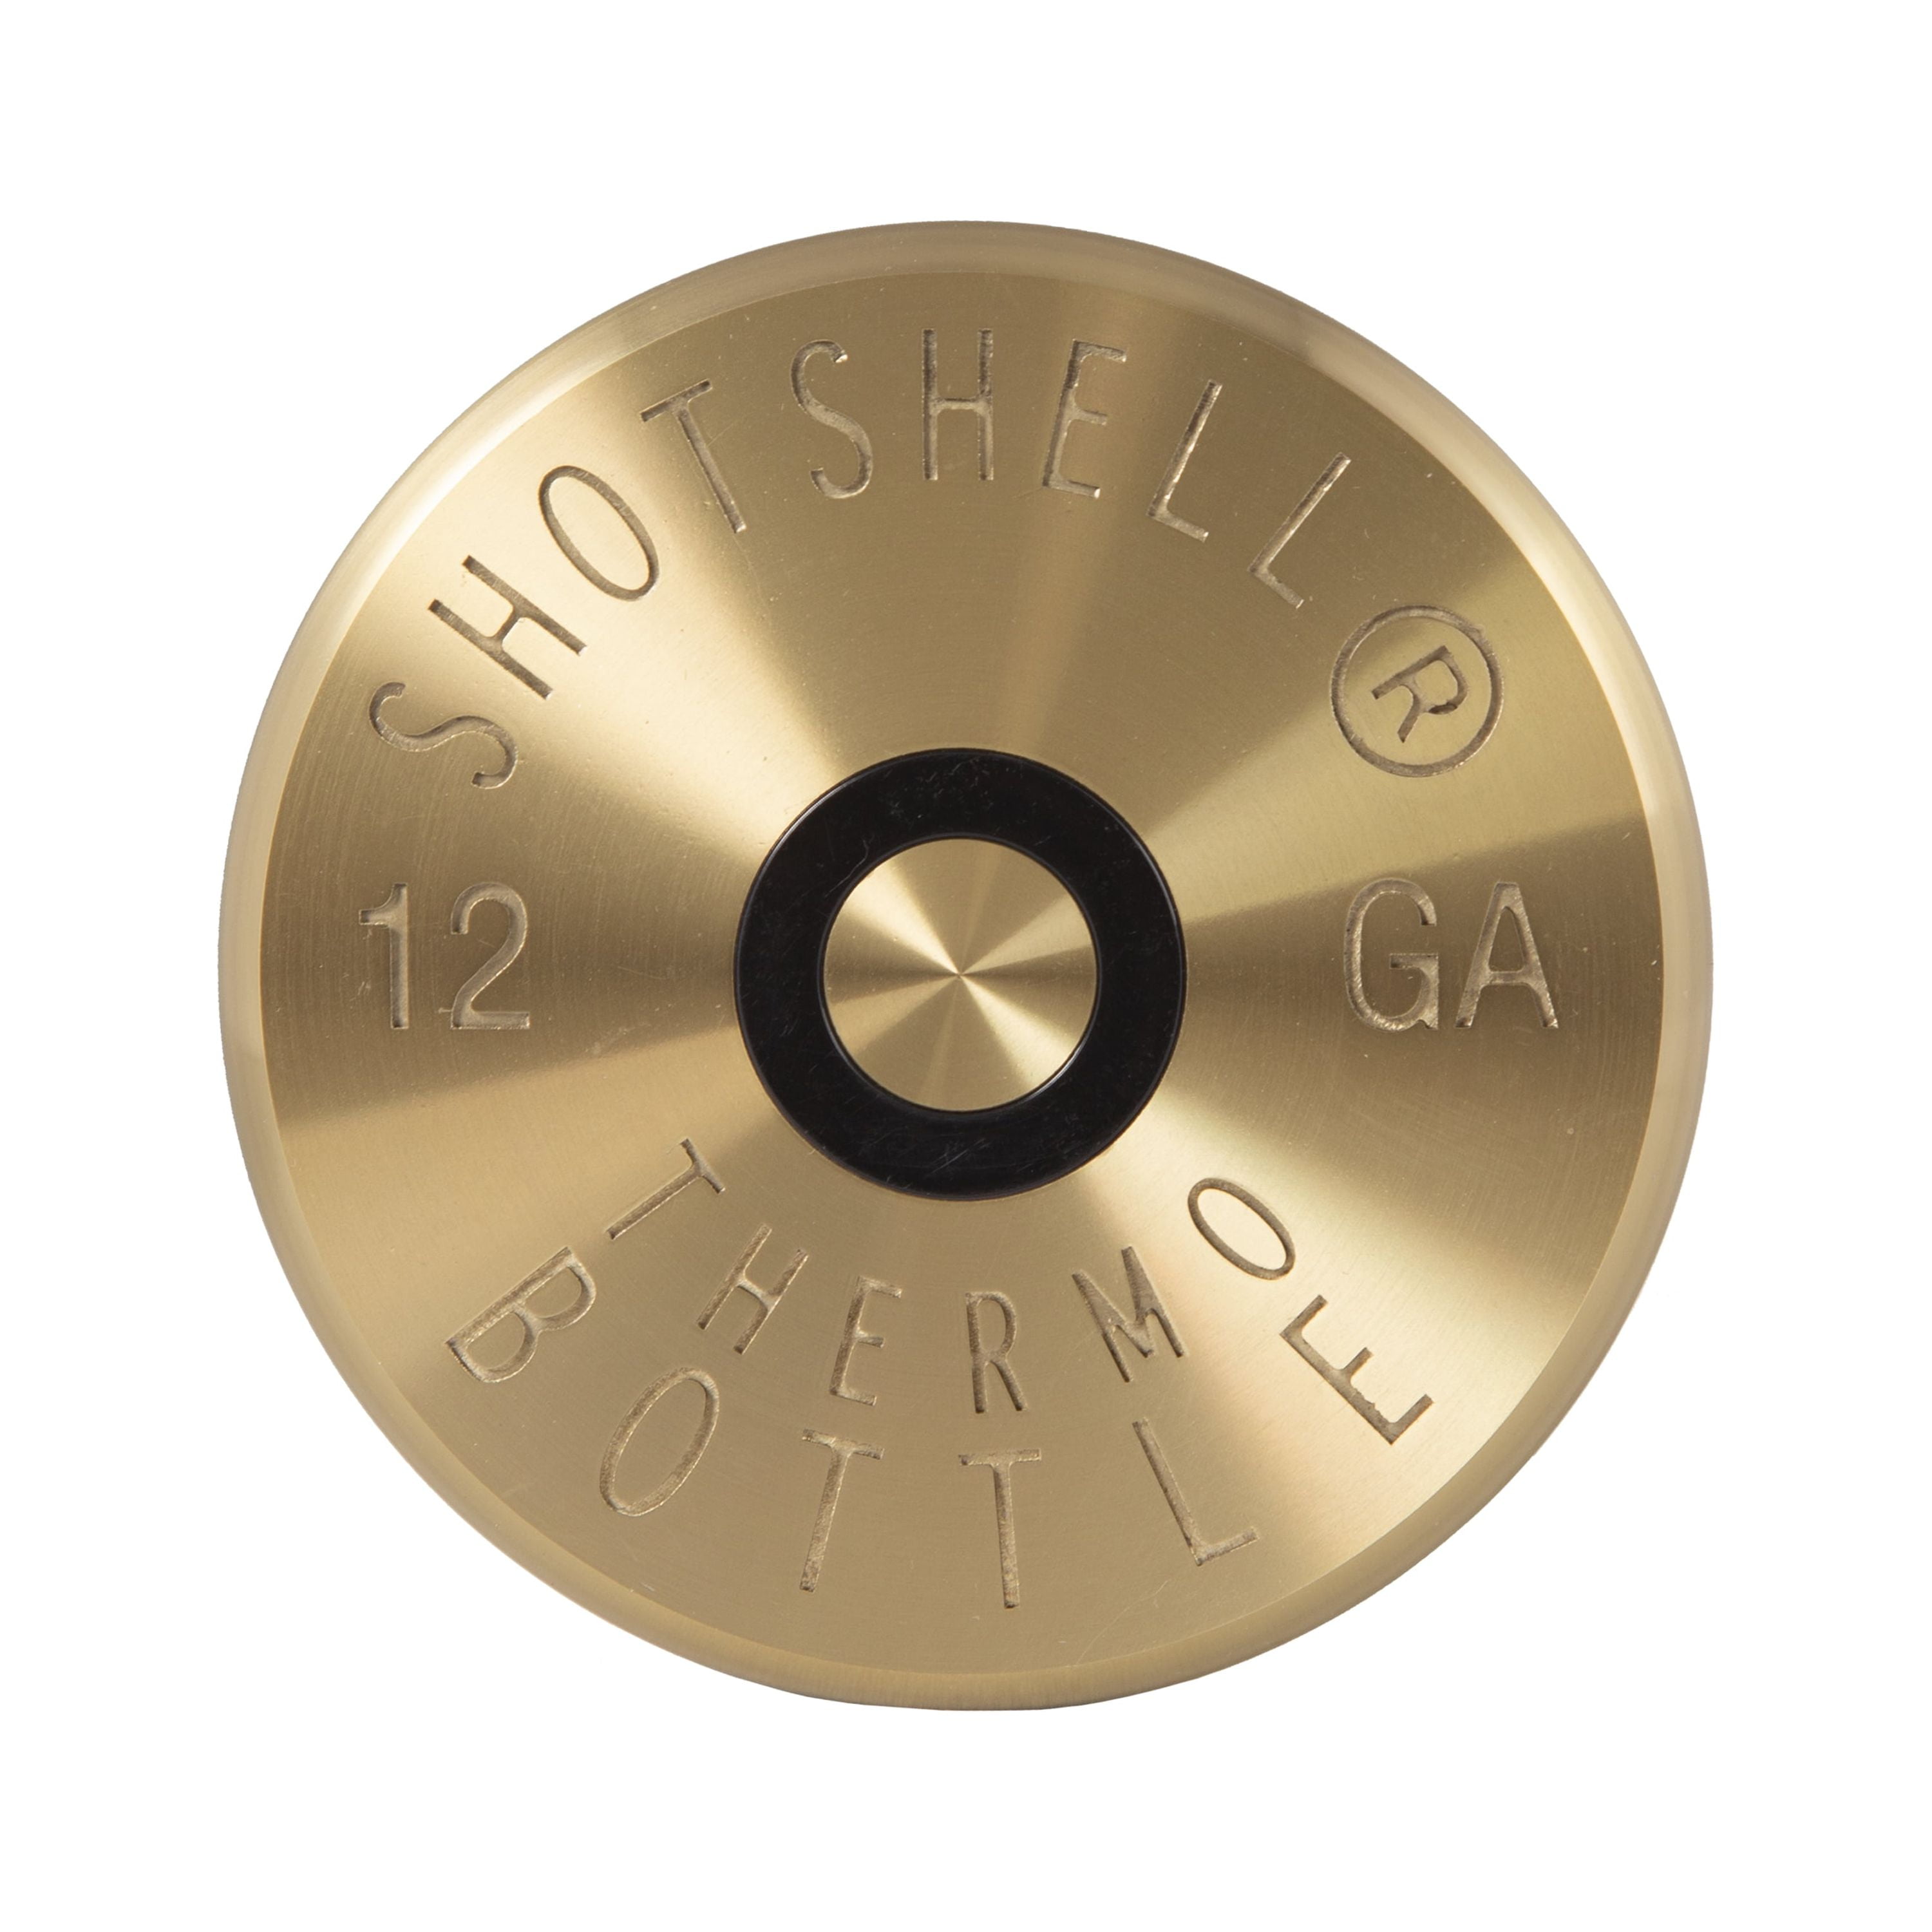 12 Gauge Shotgun Shell Insulated Thermos